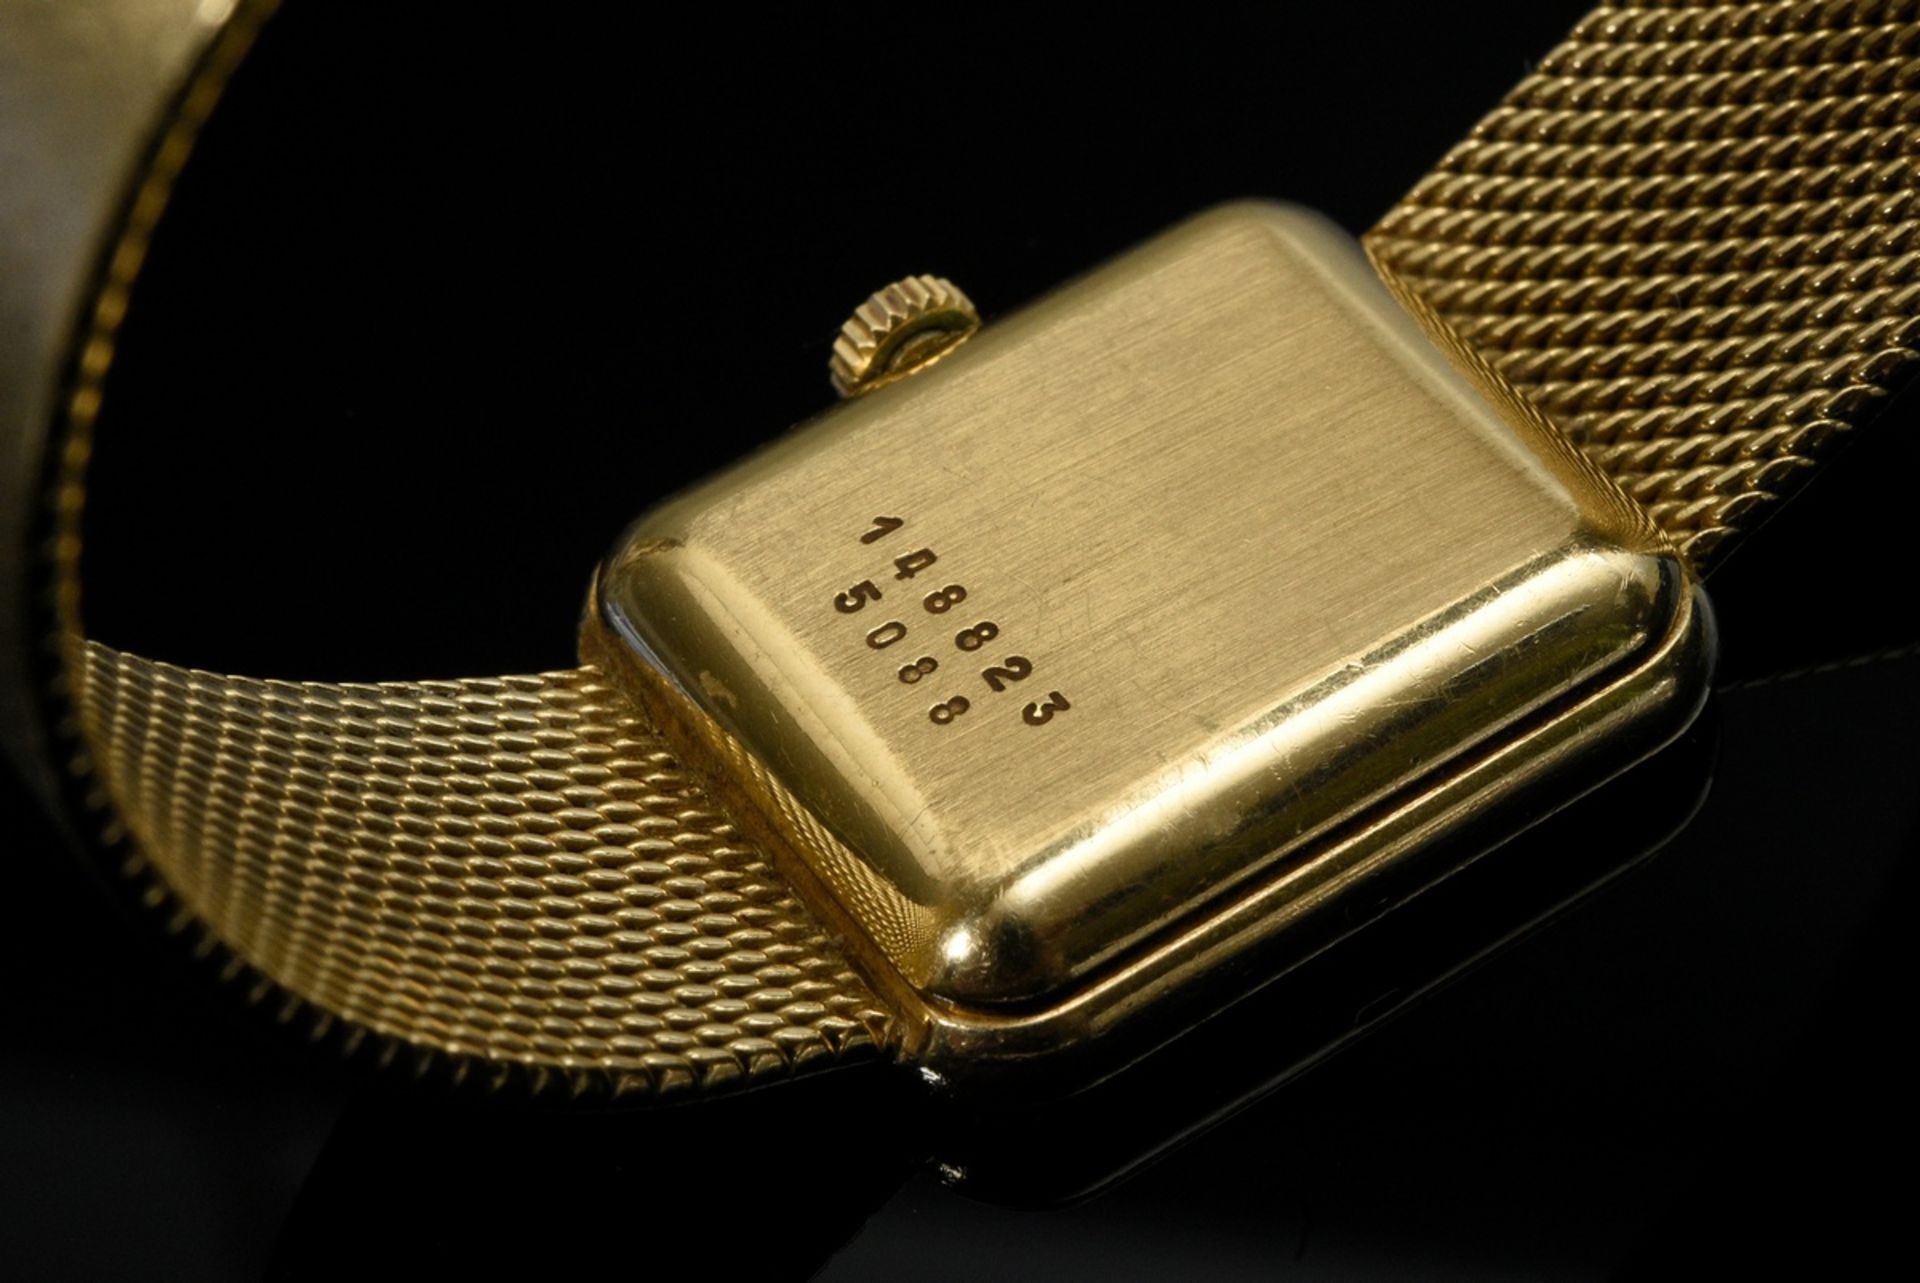 Yellow gold 750 Chopard wristwatch, manual winding with octagonal diamond bezel (add. approx. 0.60c - Image 4 of 5